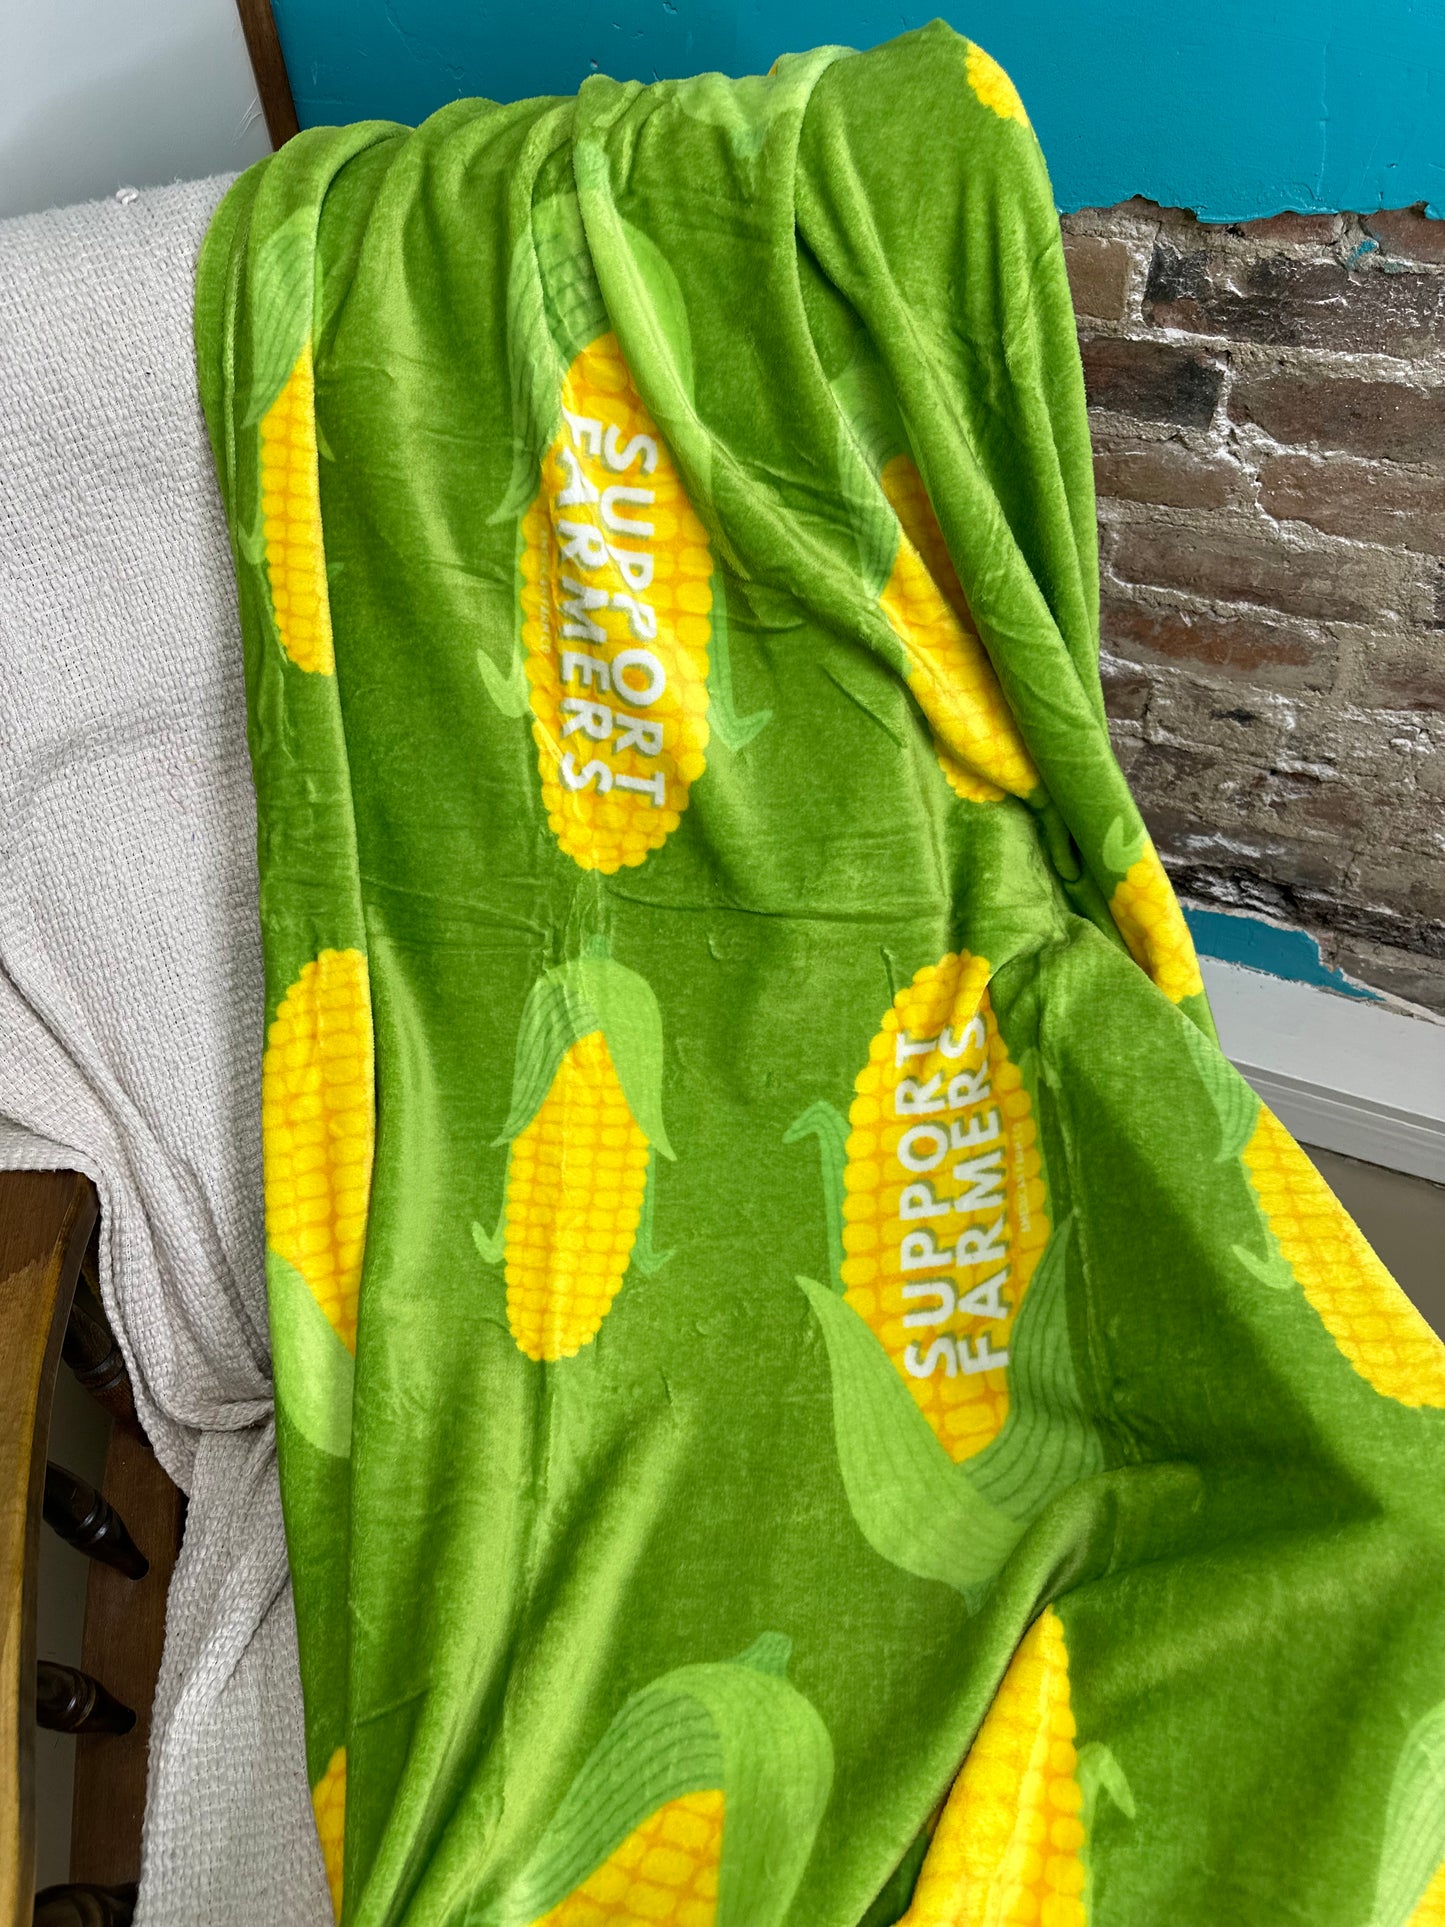 The Corn Blanket